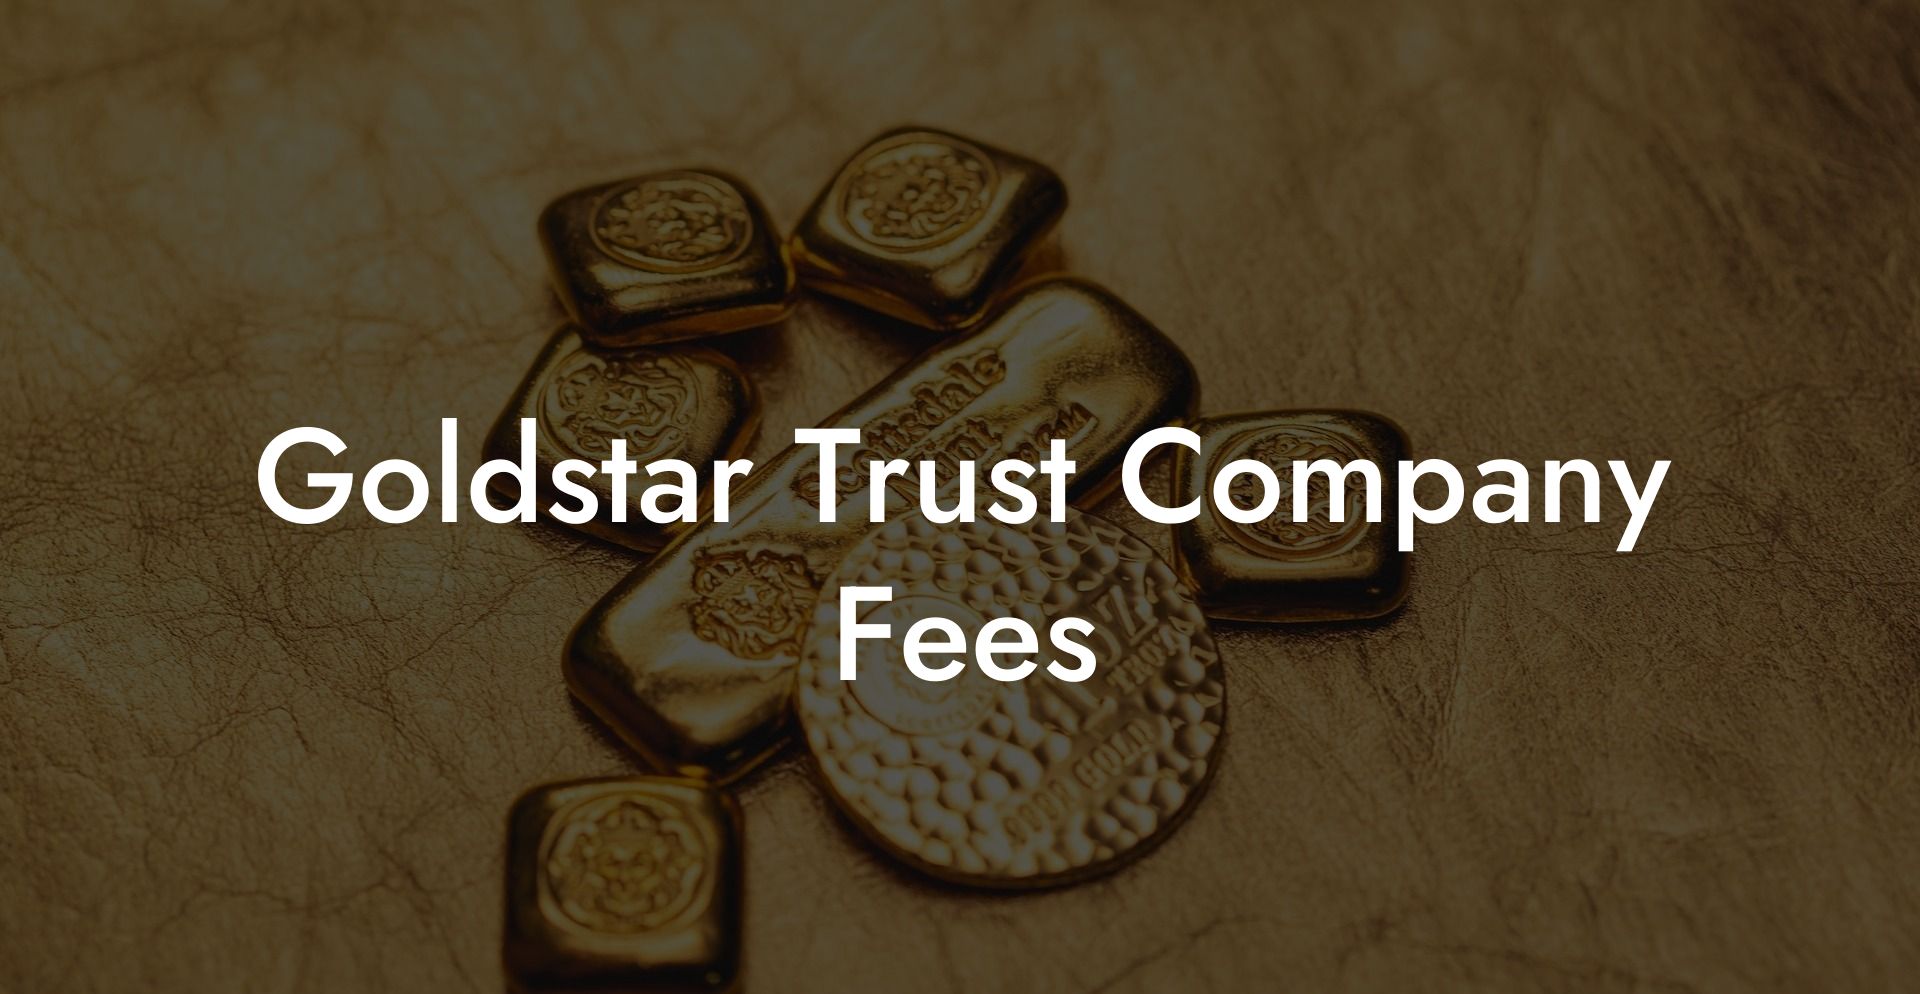 Goldstar Trust Company Fees